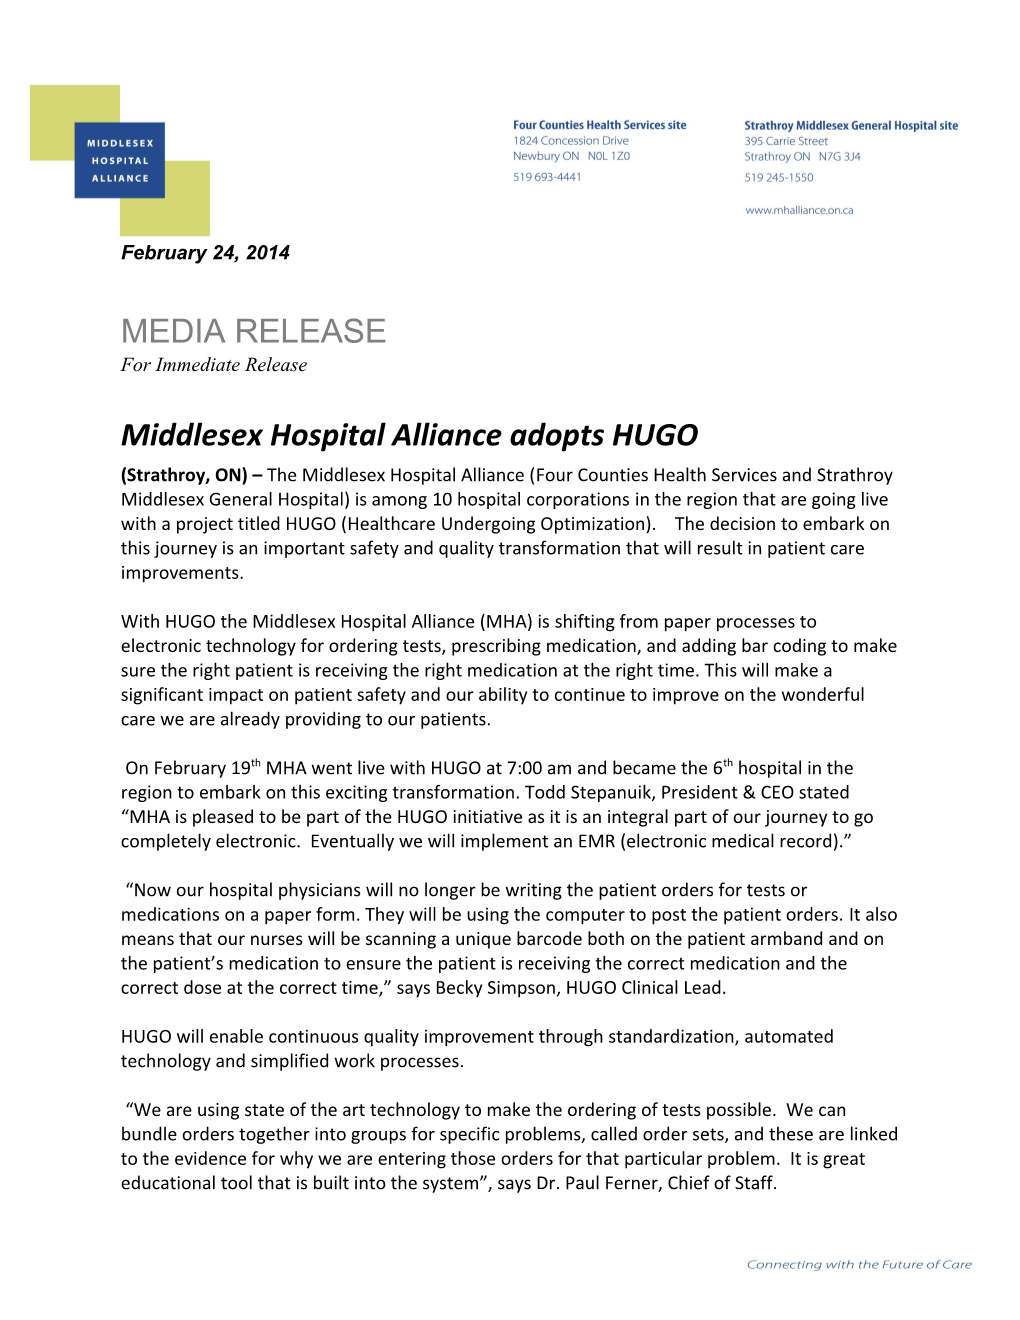 Middlesex Hospital Alliance Adopts HUGO